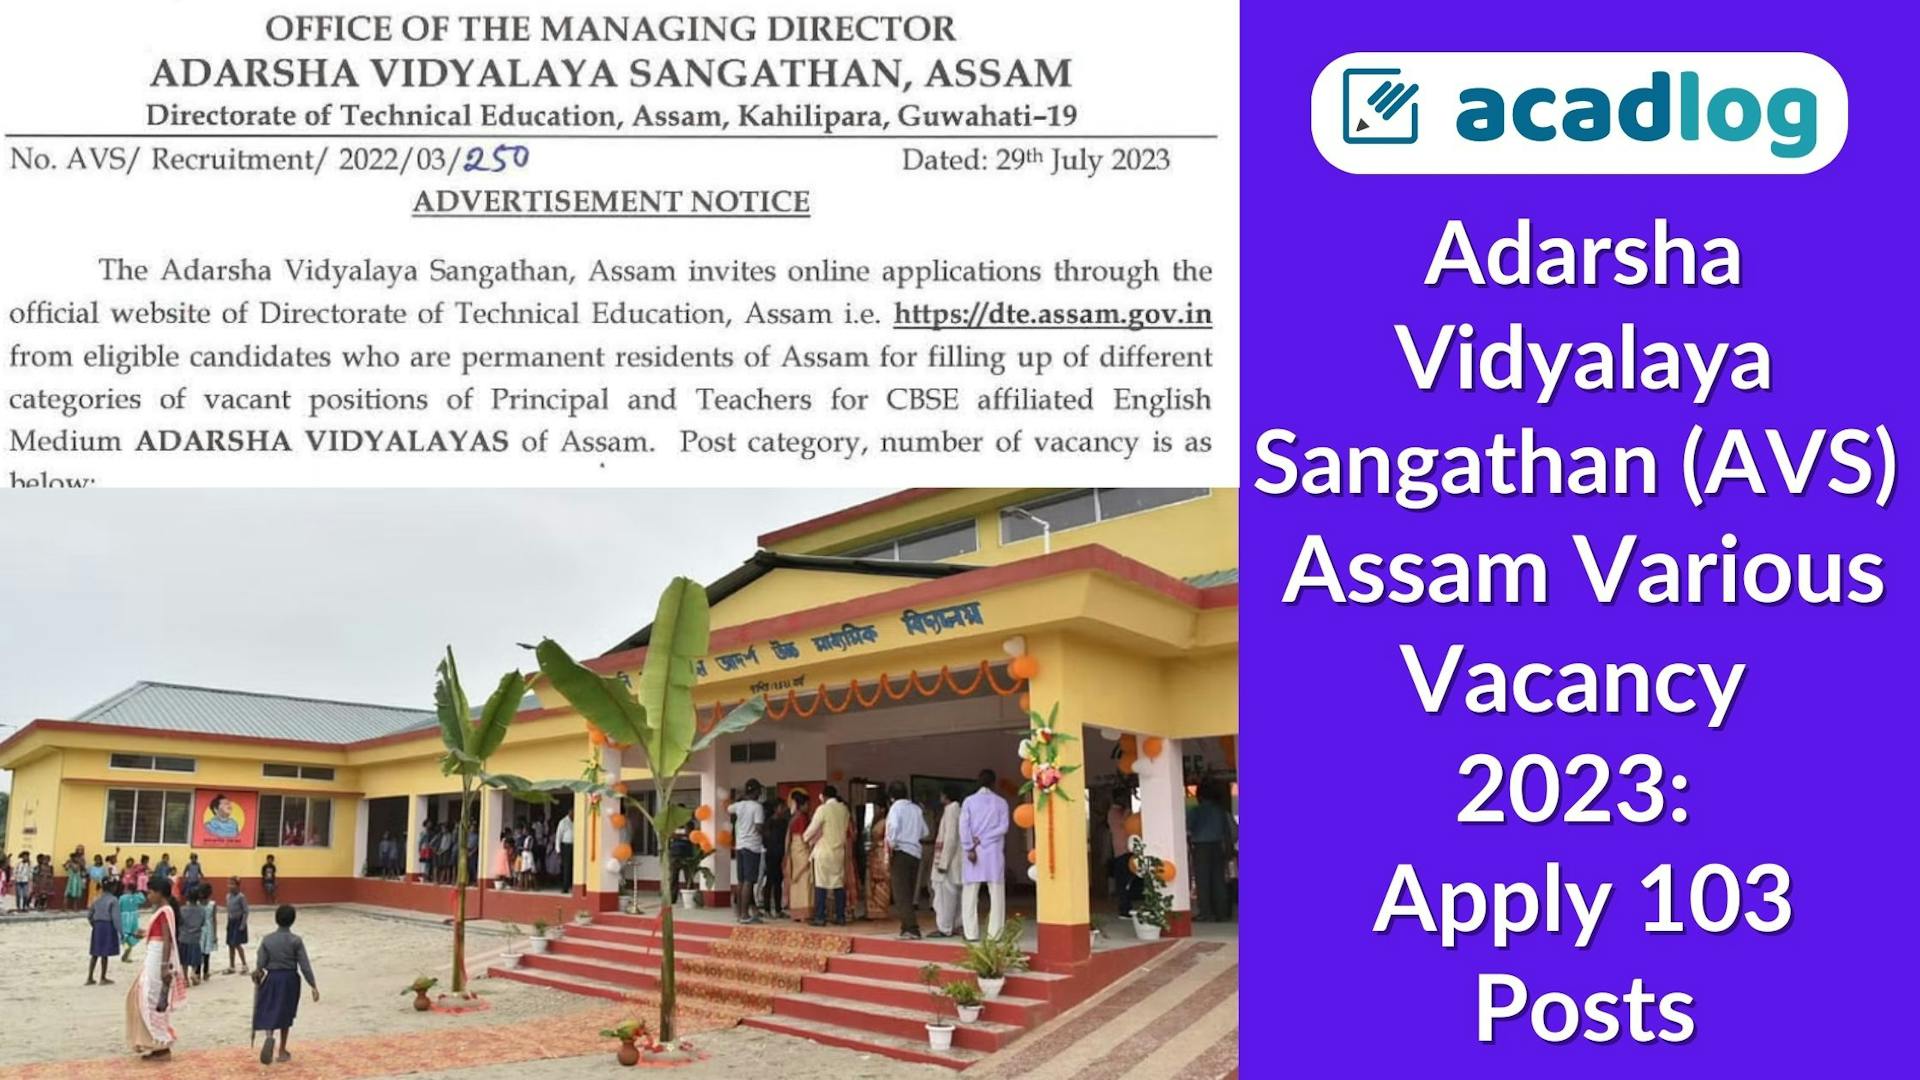 Adarsha Vidyalaya Sangathan (AVS) Assam Various Vacancy 2023: Apply 103 Posts